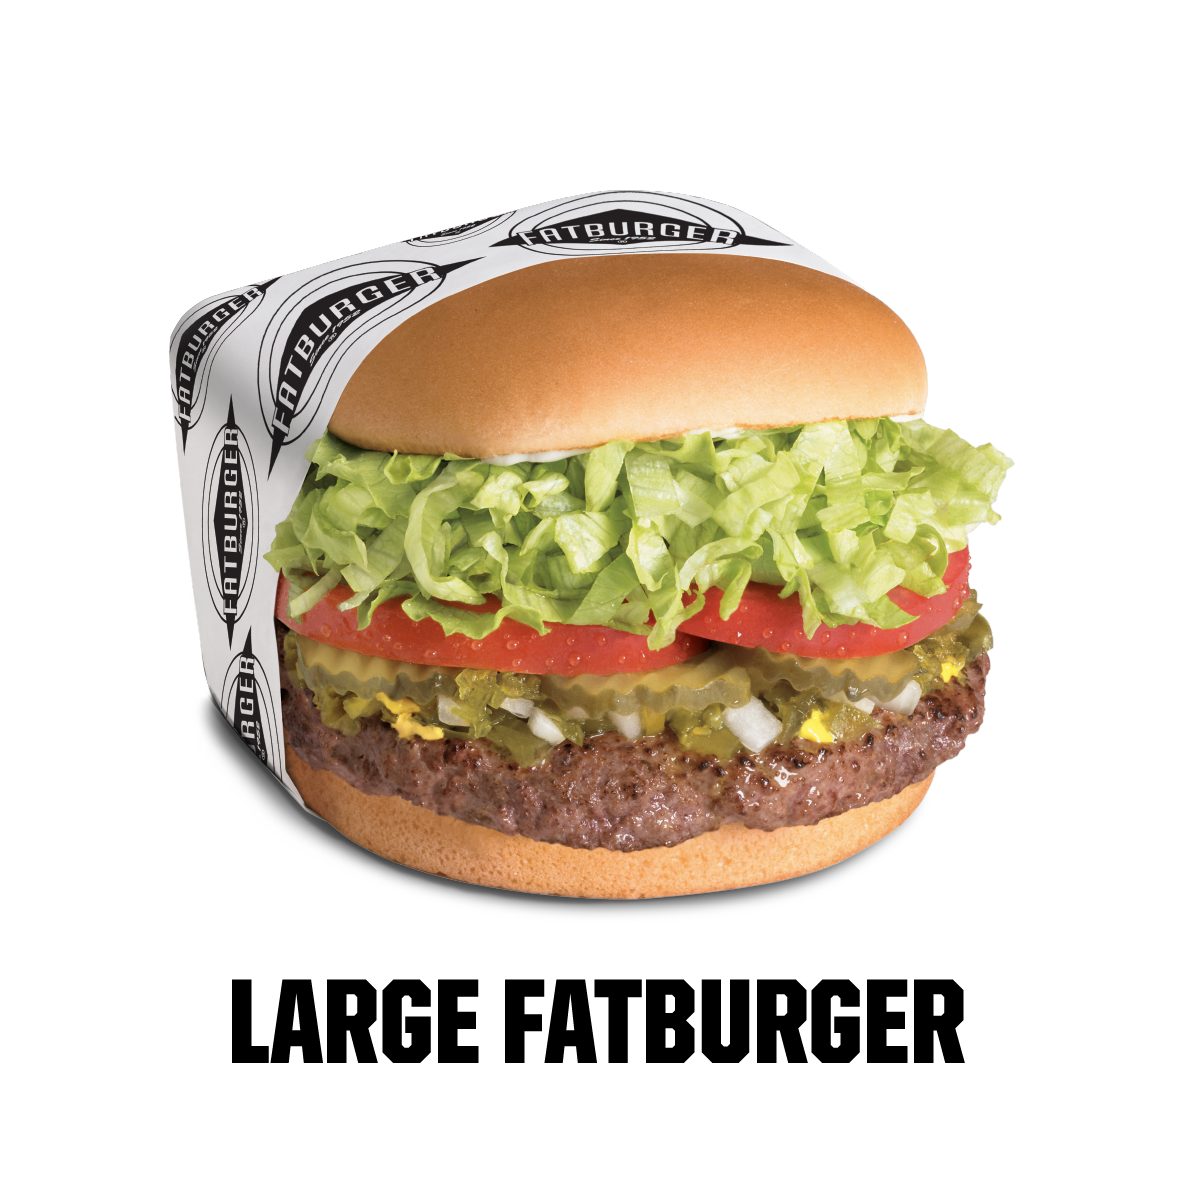 Image+of+Large+Fatburger